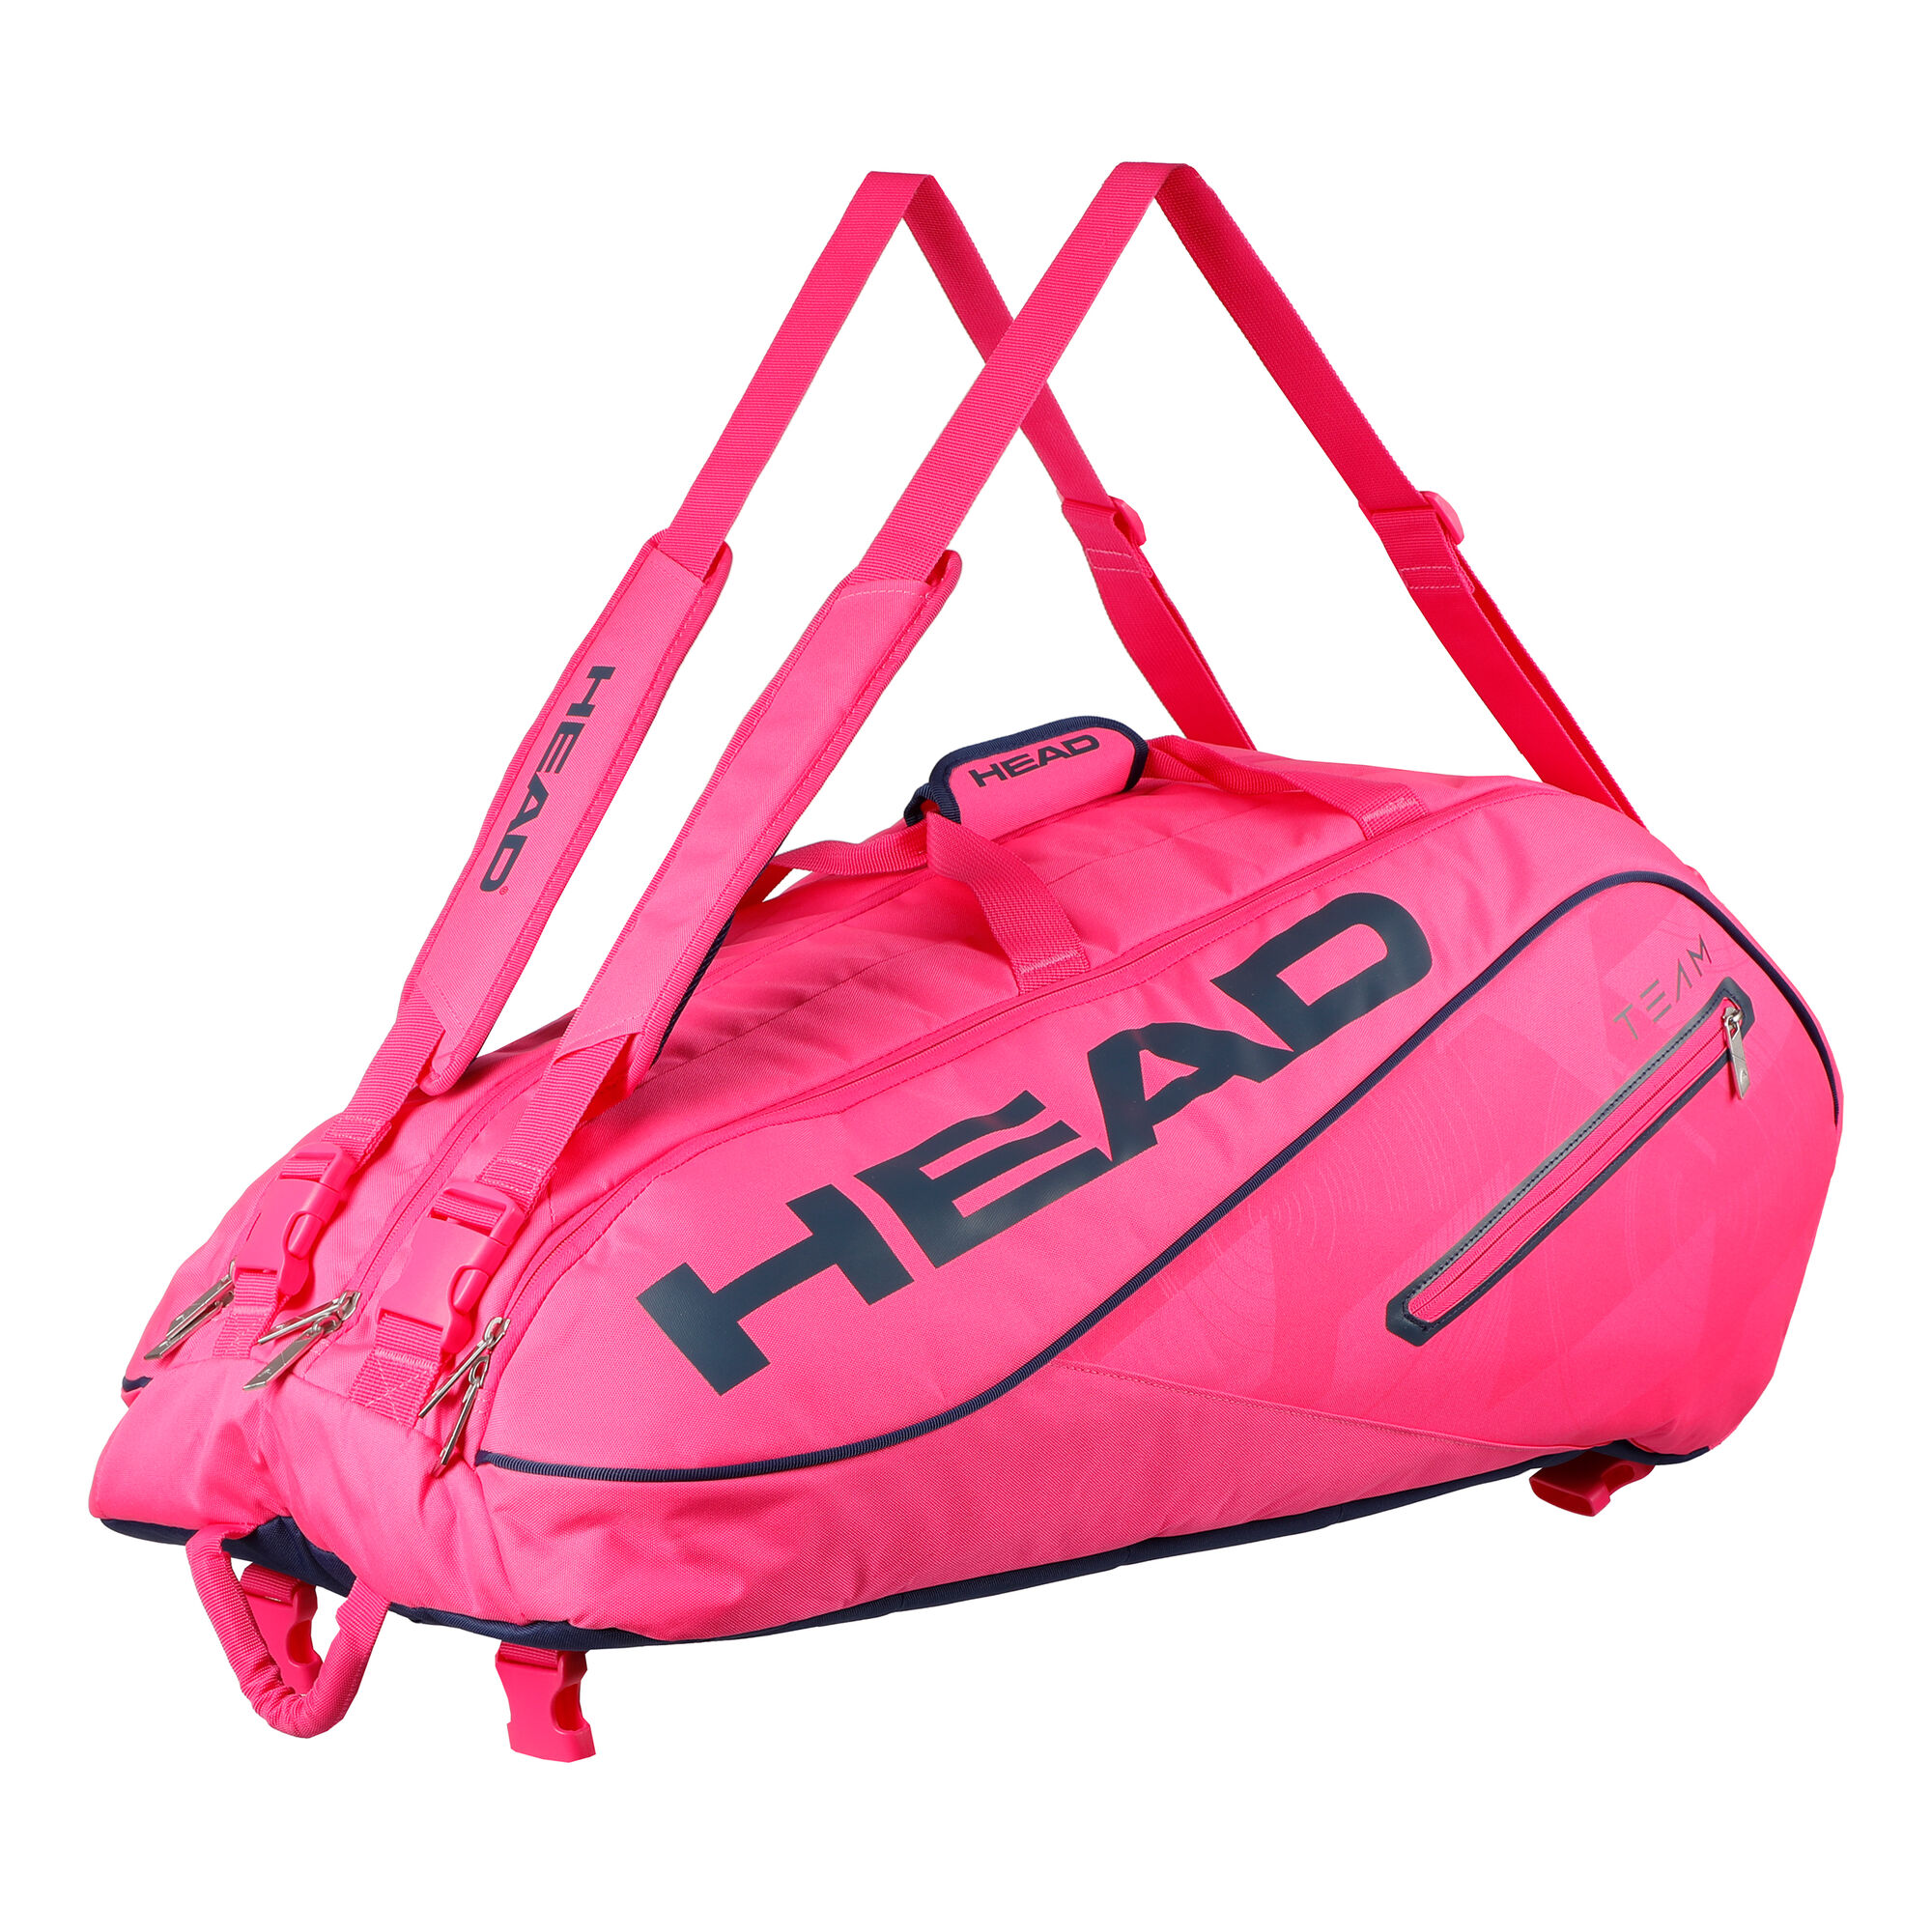 HEAD 12R Monstercombi Raquetero Edición Especial - Rosa, Azul Oscuro compra online | Tennis-Point